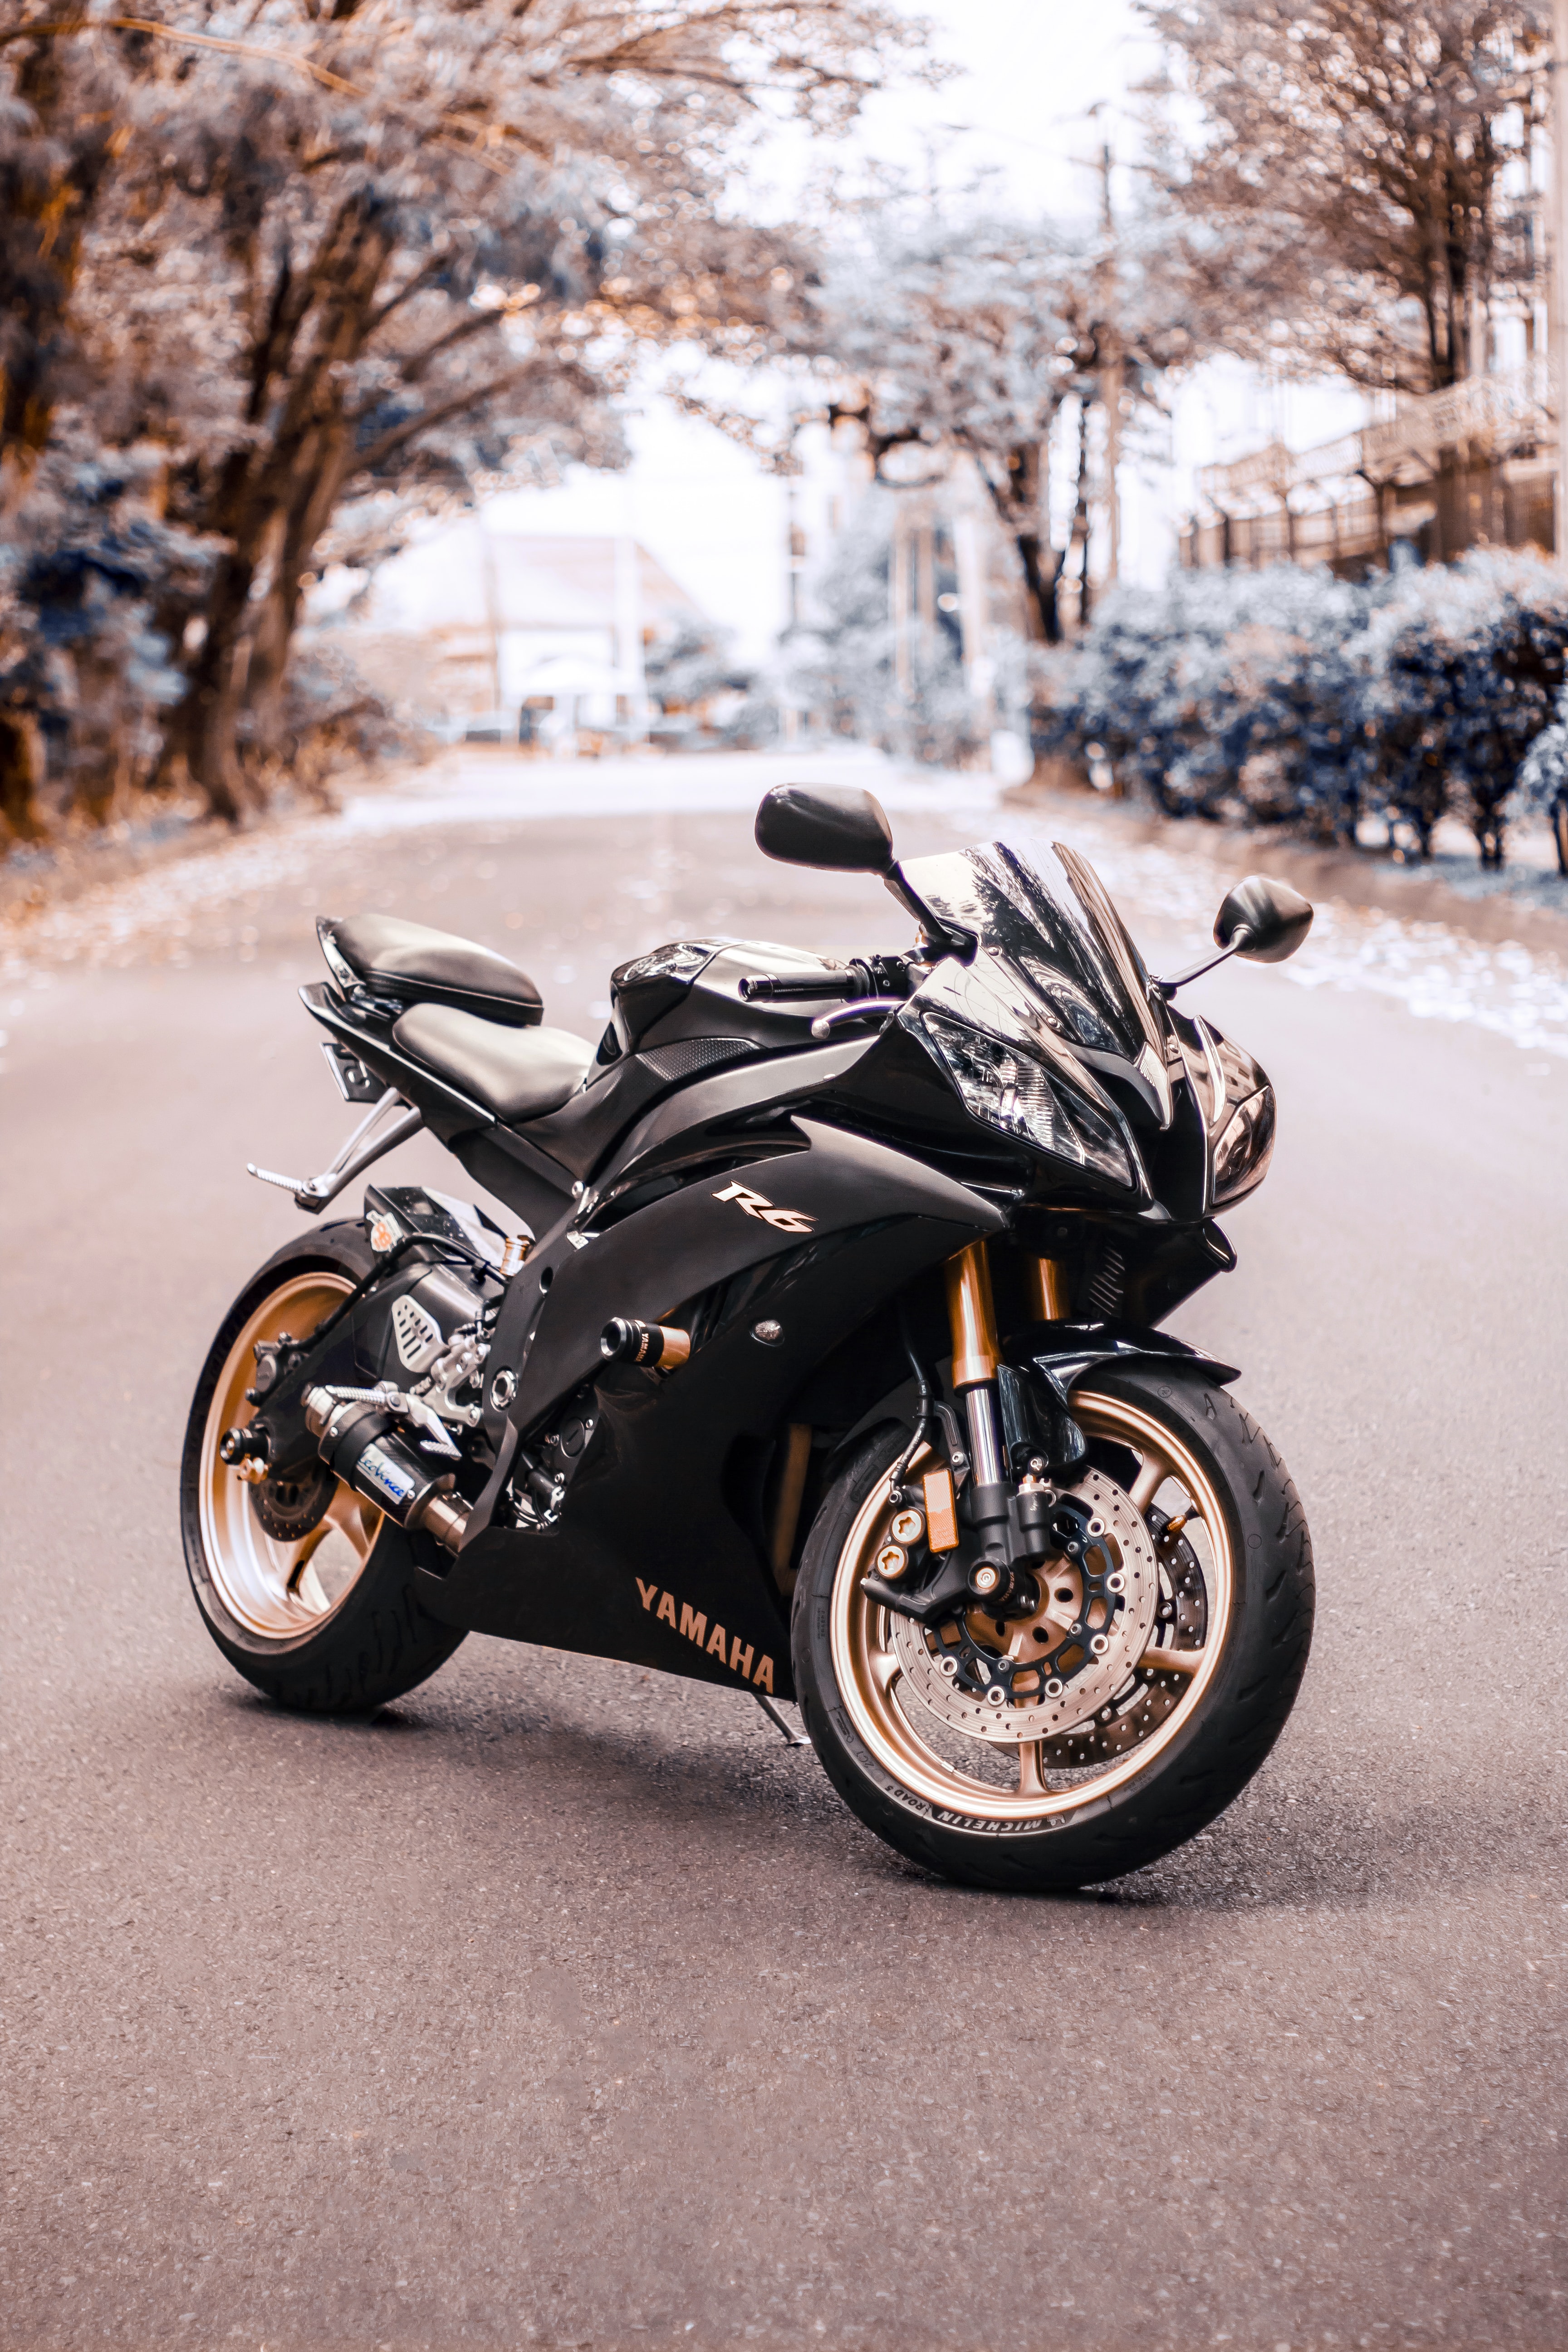 yamaha, bike, motorcycles, yamaha r6, side view, black, motorcycle